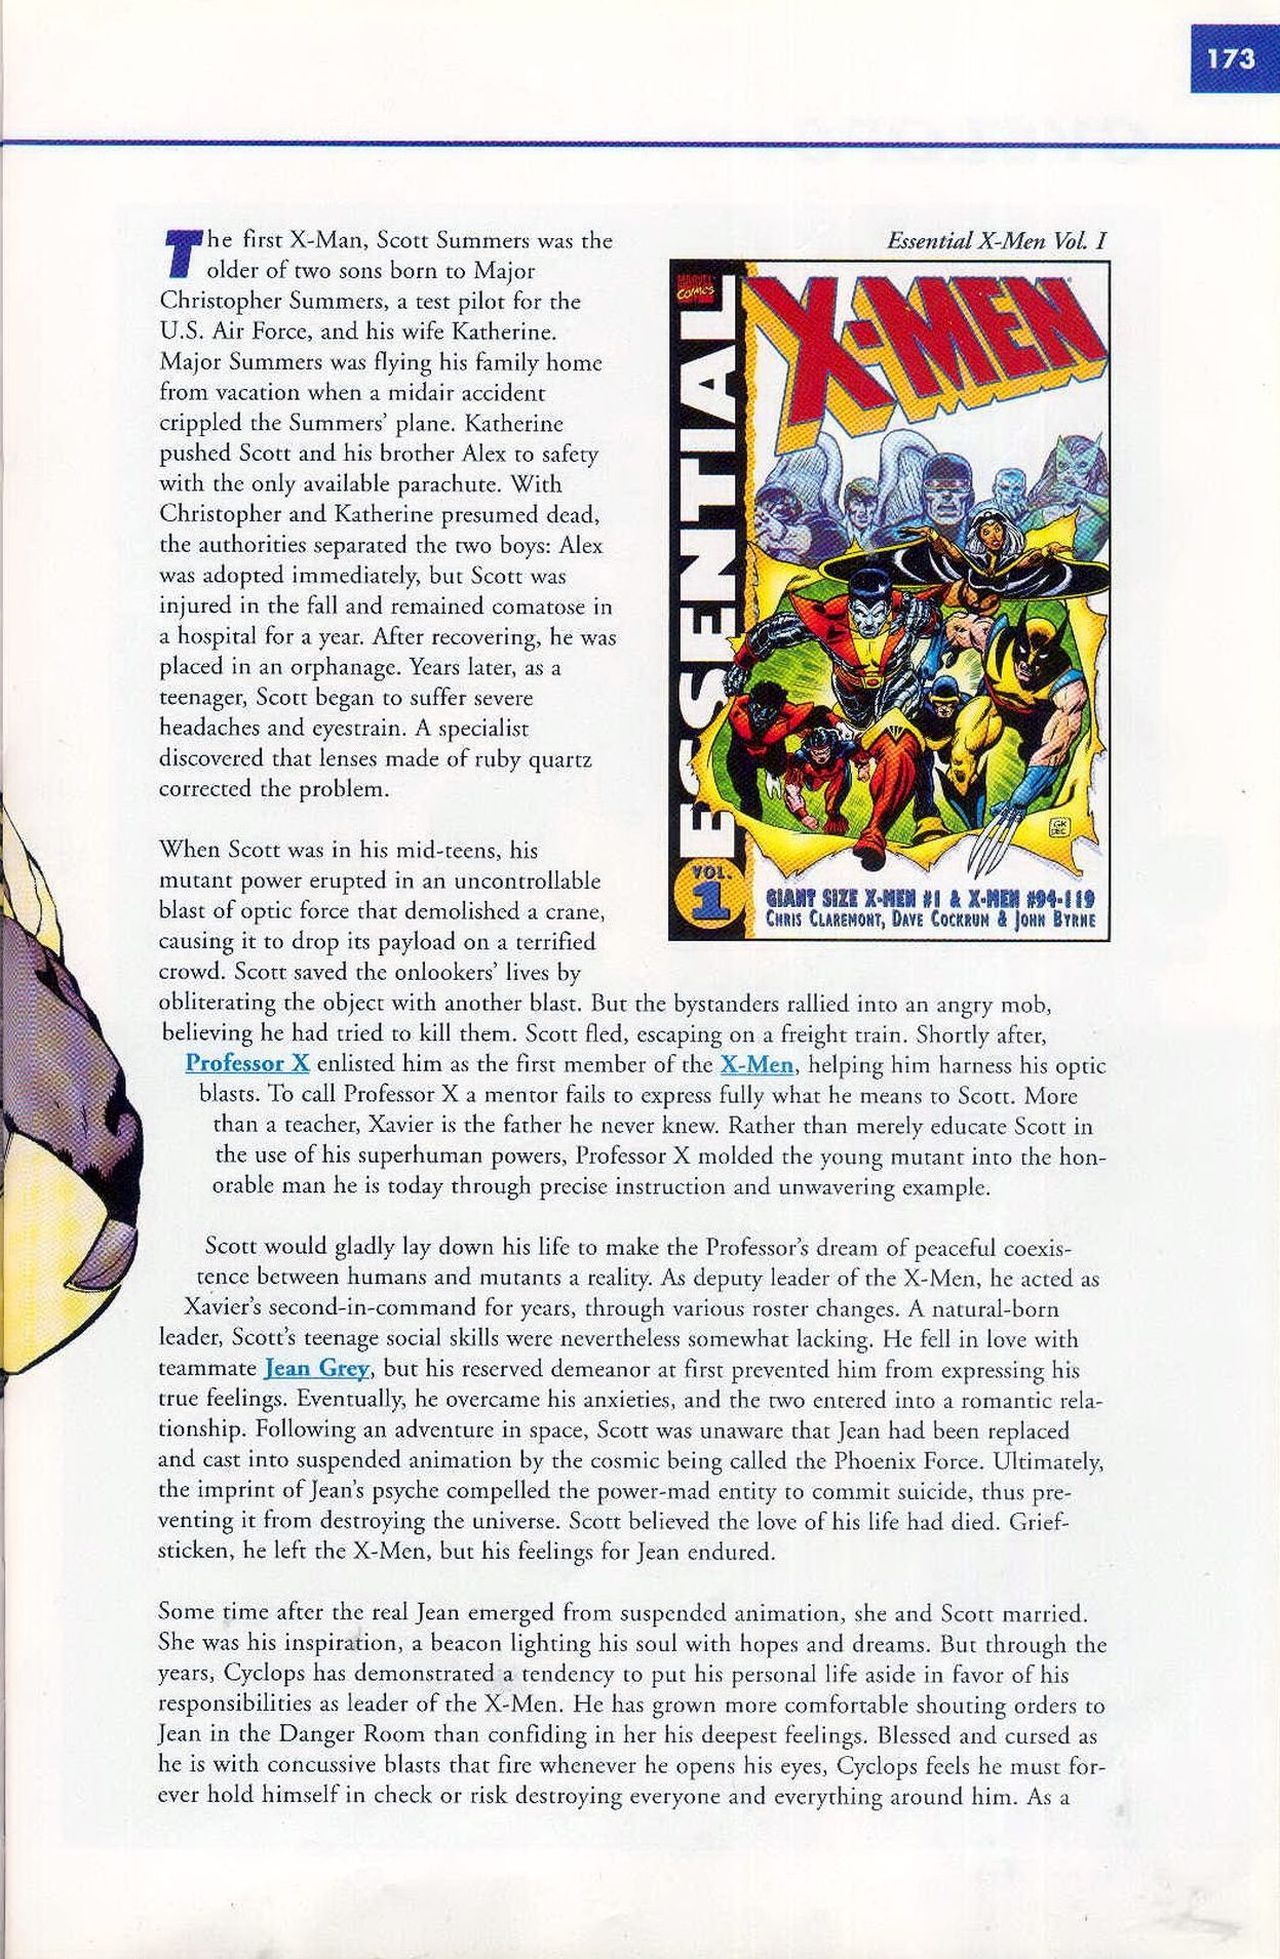 Read online Marvel Encyclopedia comic -  Issue # TPB 1 - 171